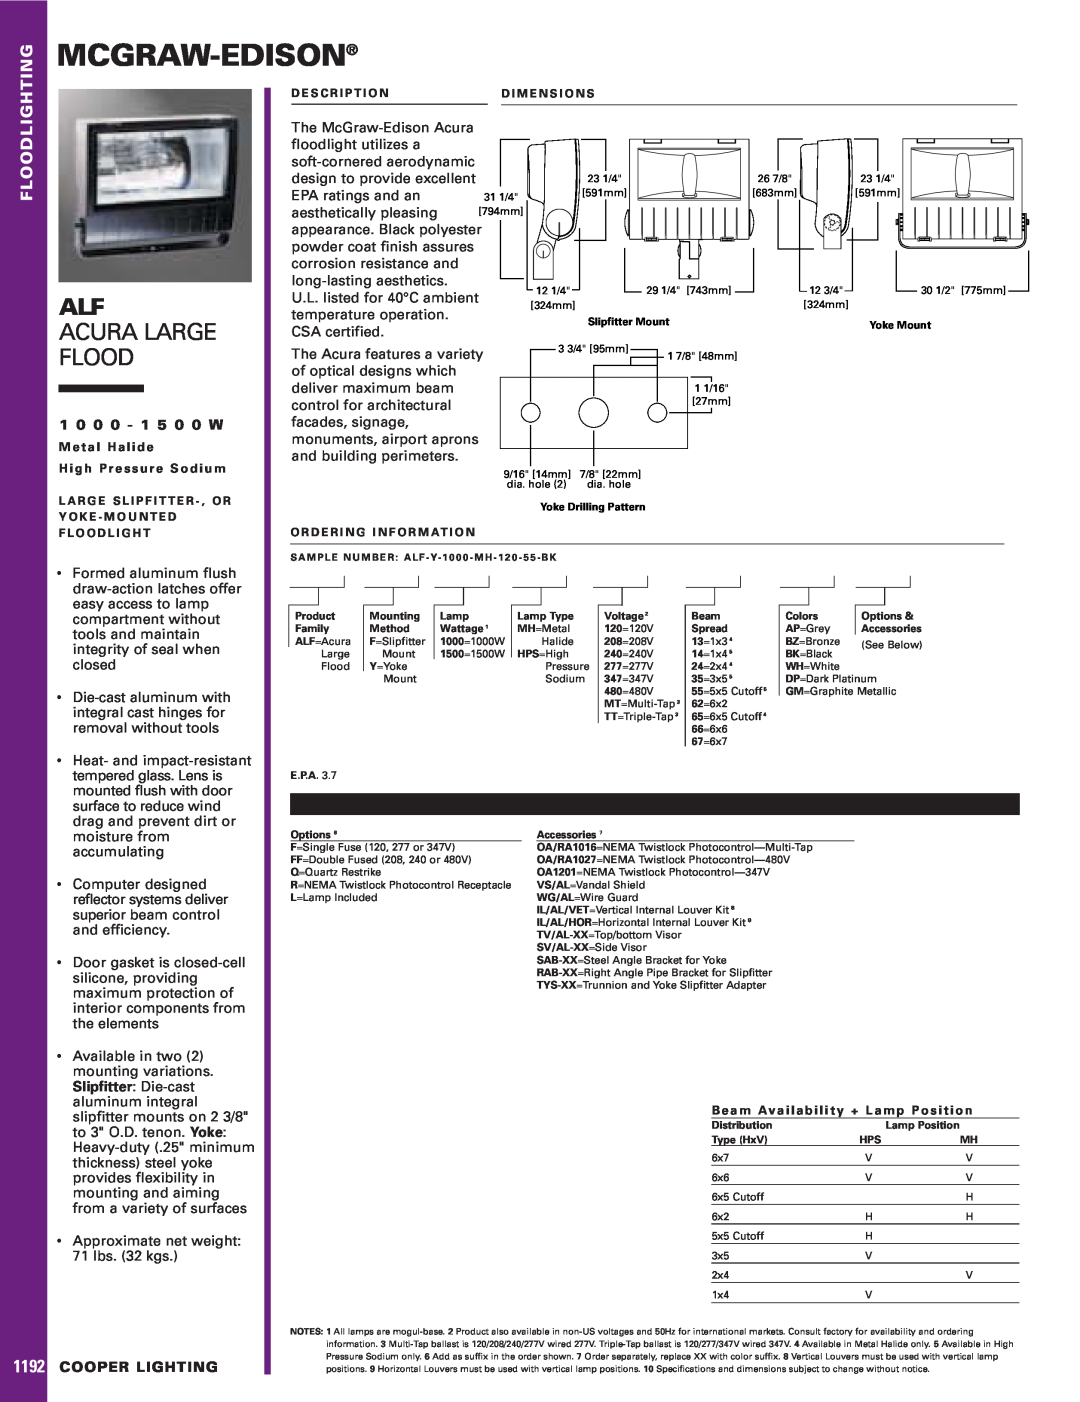 Cooper Lighting 1192 specifications Mcgraw-Edison, Floodlighting, 1 0 0 0 - 1 5 0 0 W, Slipfitter Die-cast 